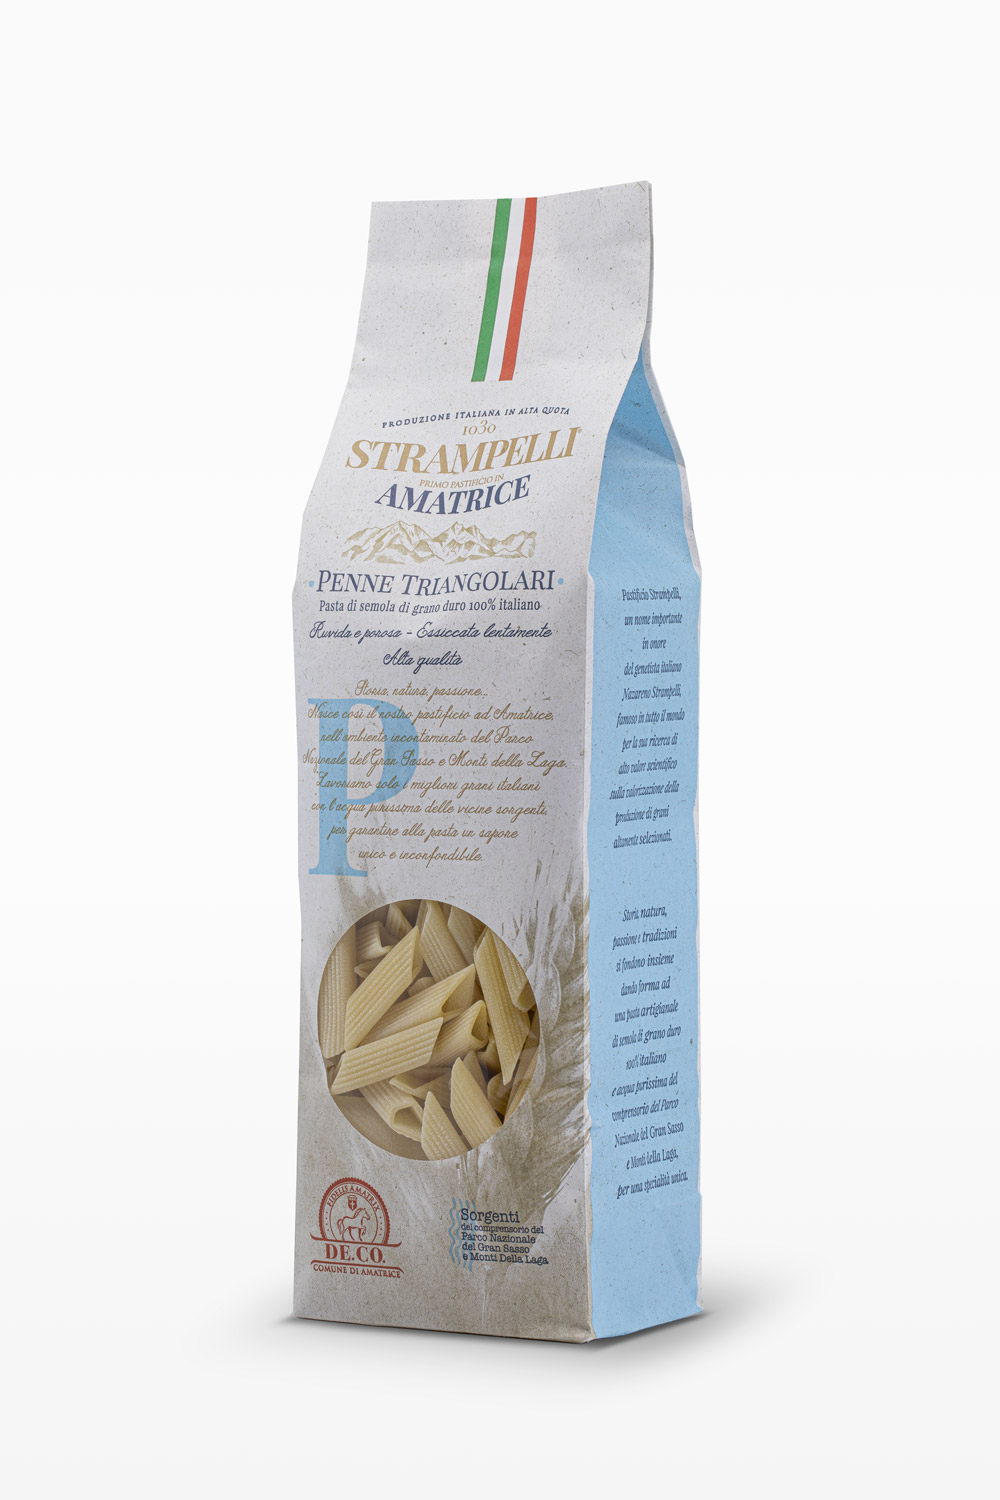 Penne triangolari - Durum wheat semolina pasta, rough and porous, 100% Italian wheat, slow drying at low temperature.